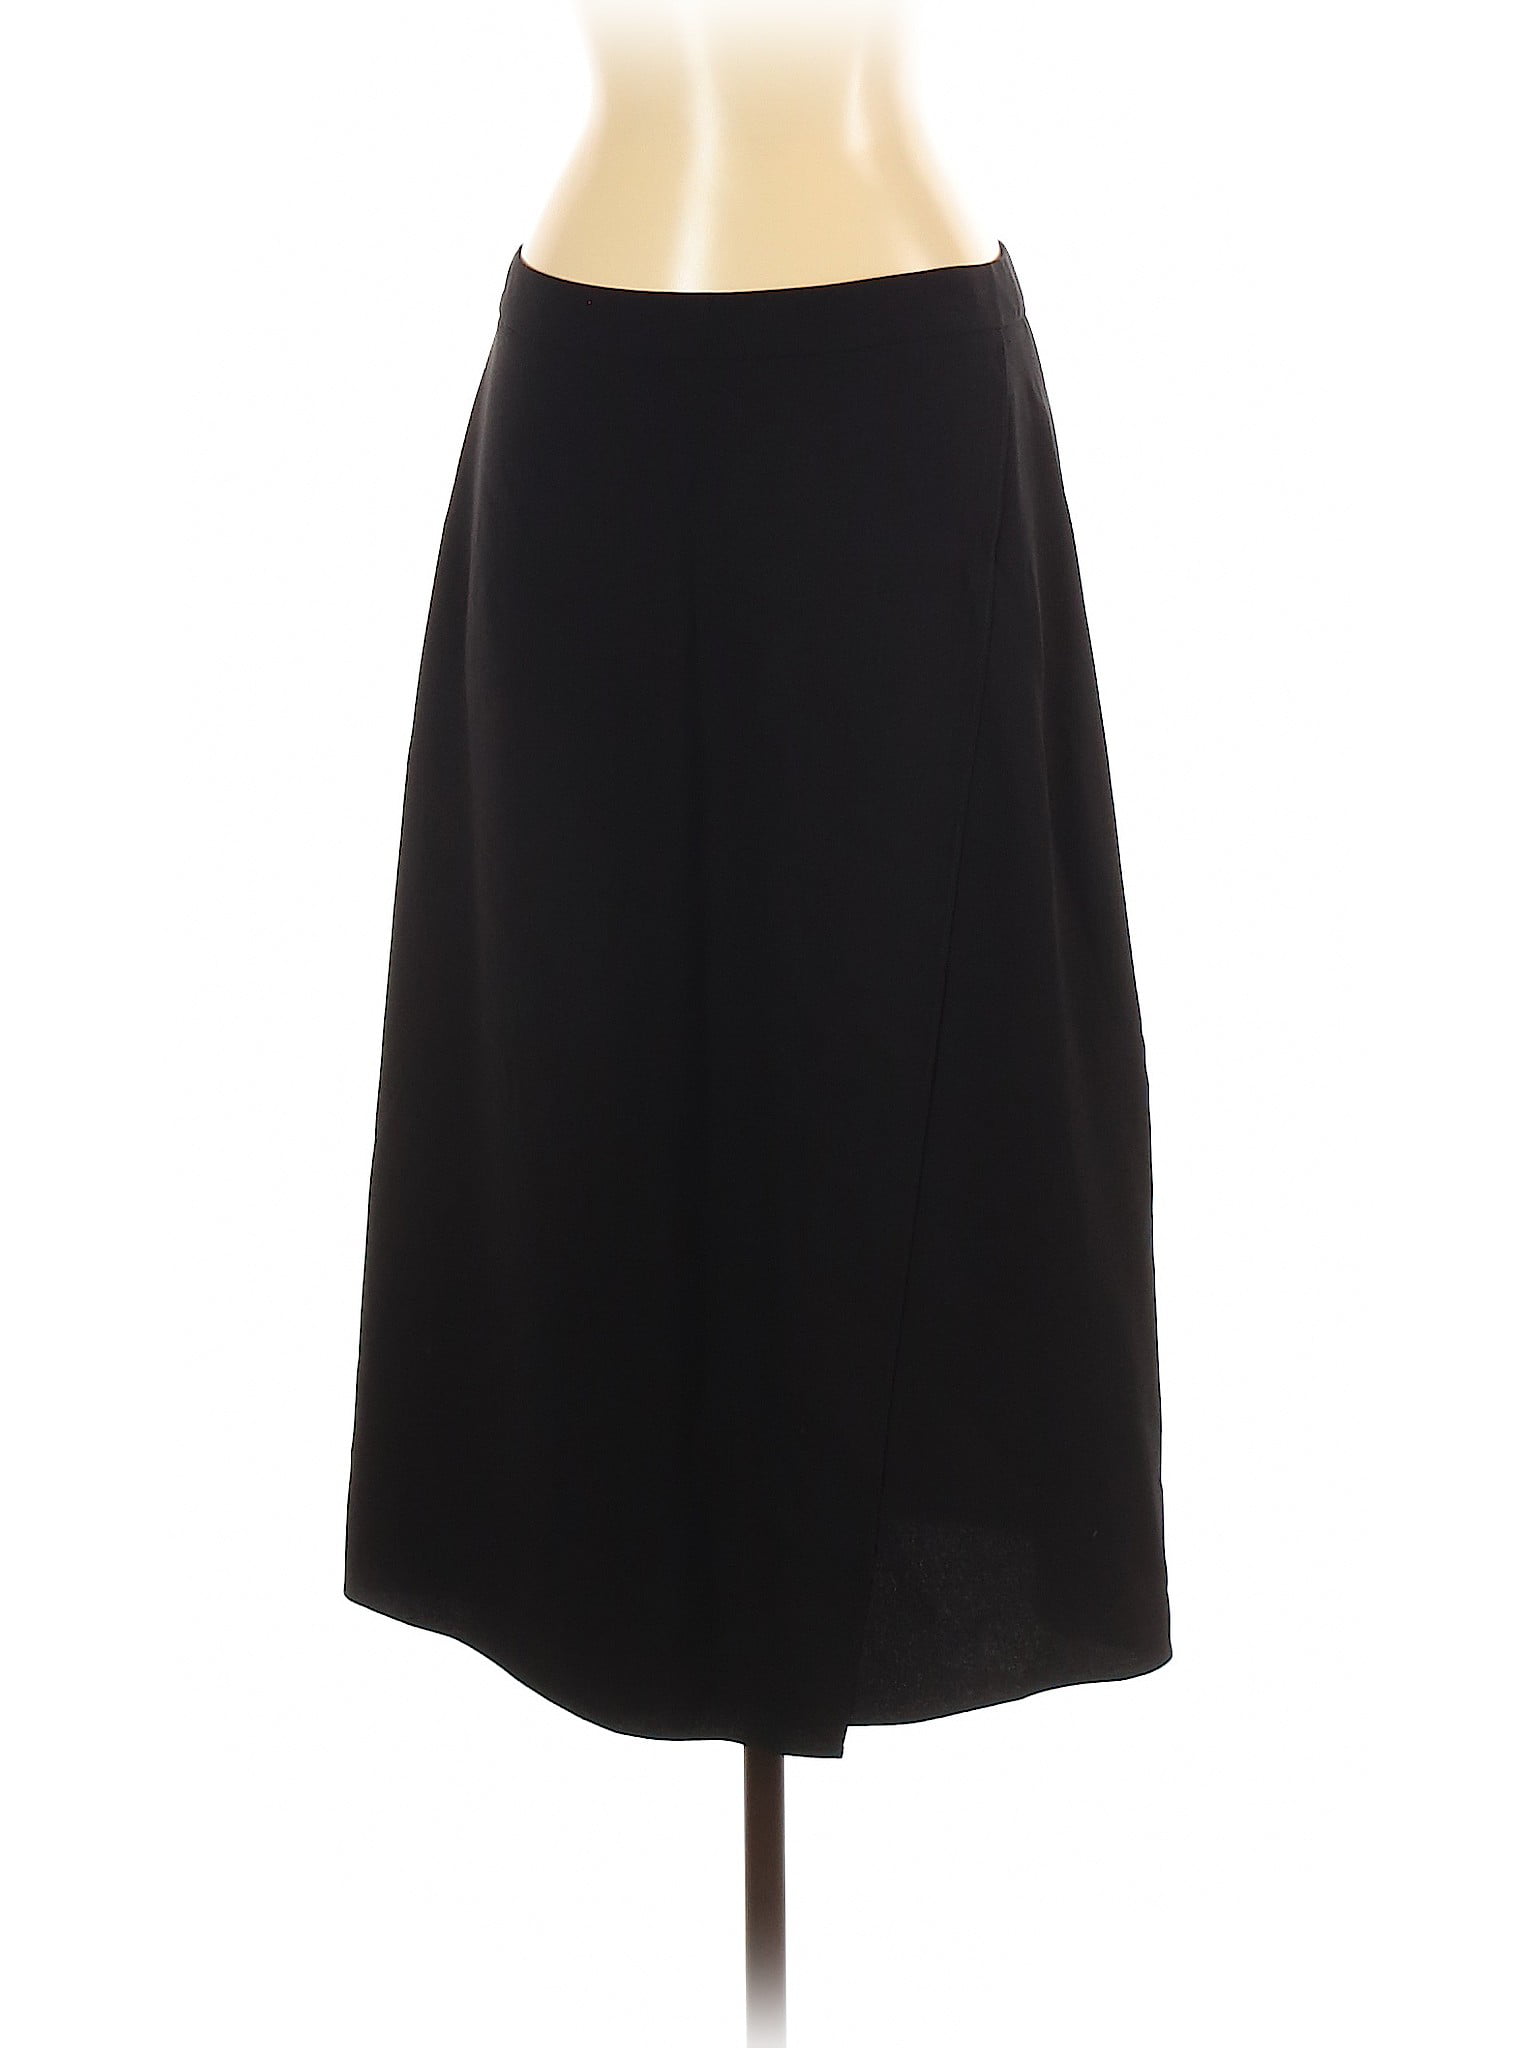 DKNY - Pre-Owned DKNY Women's Size 4 Casual Skirt - Walmart.com ...